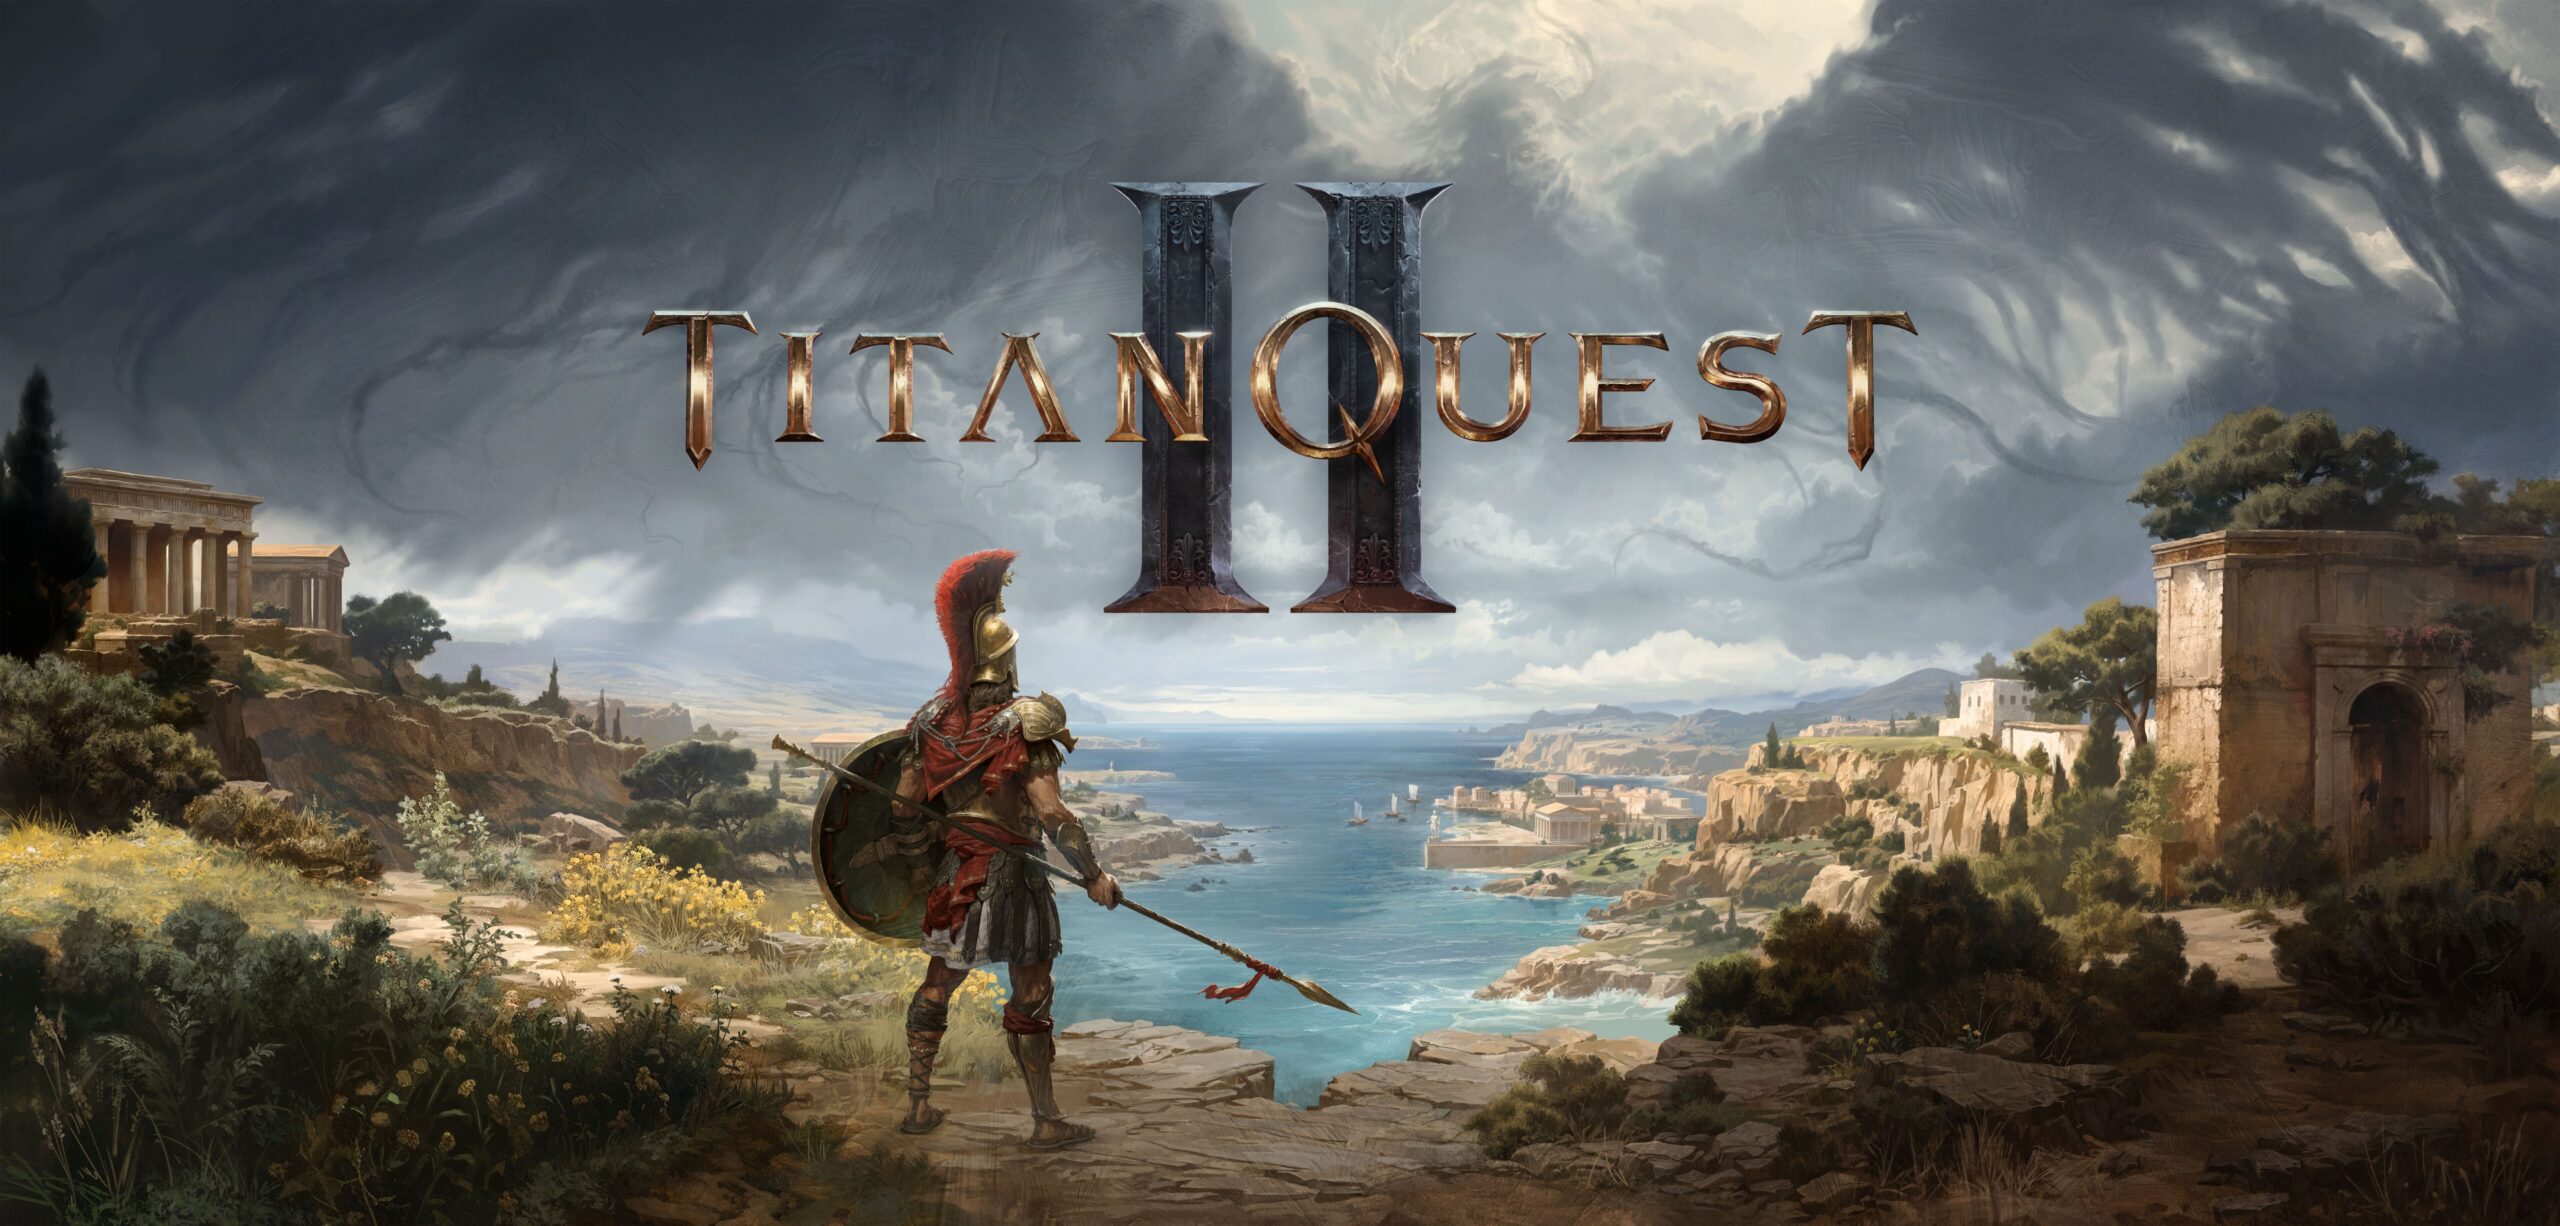 Titan Quest 2